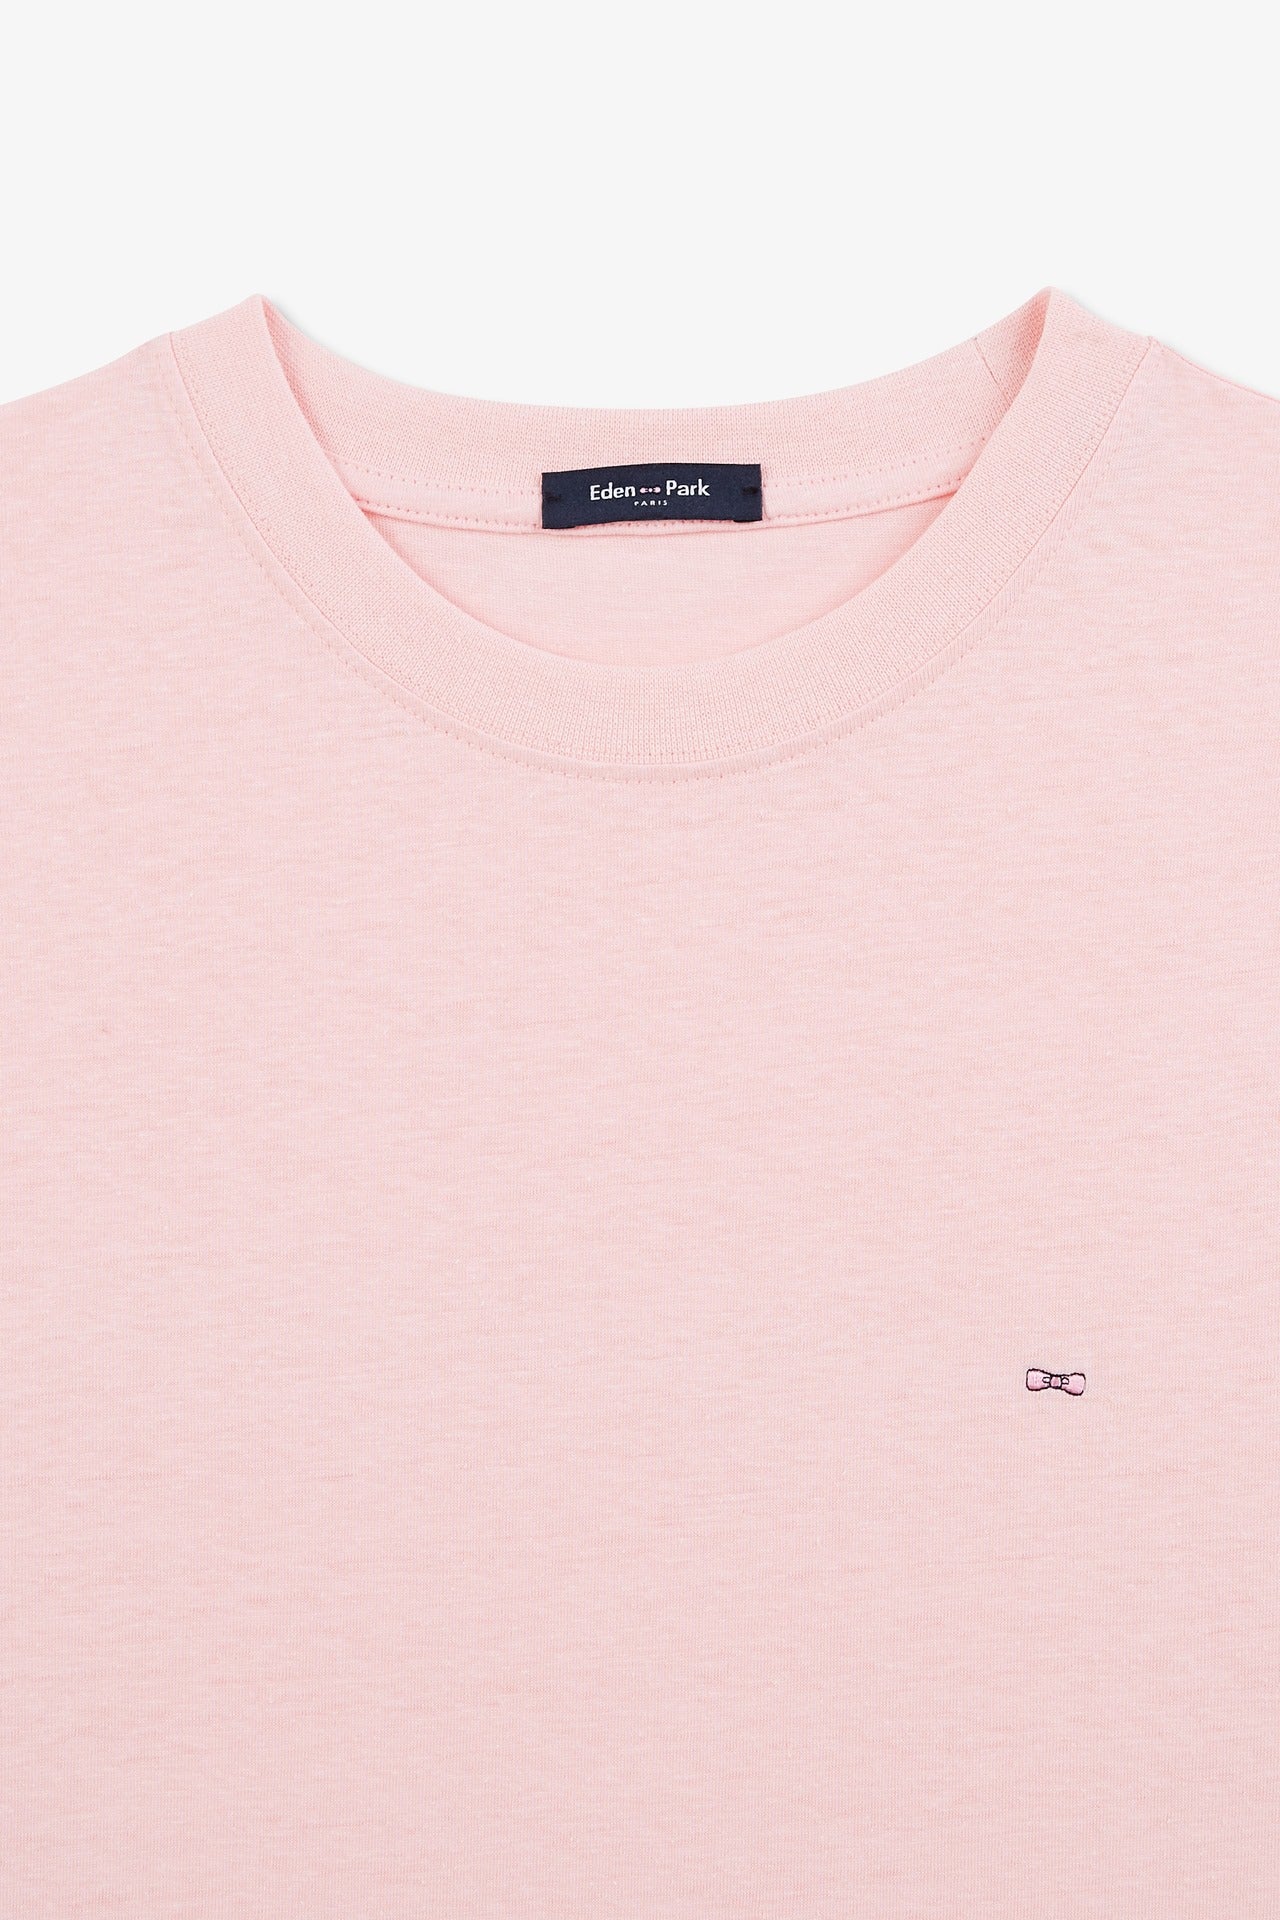 T-shirt manches courtes rose